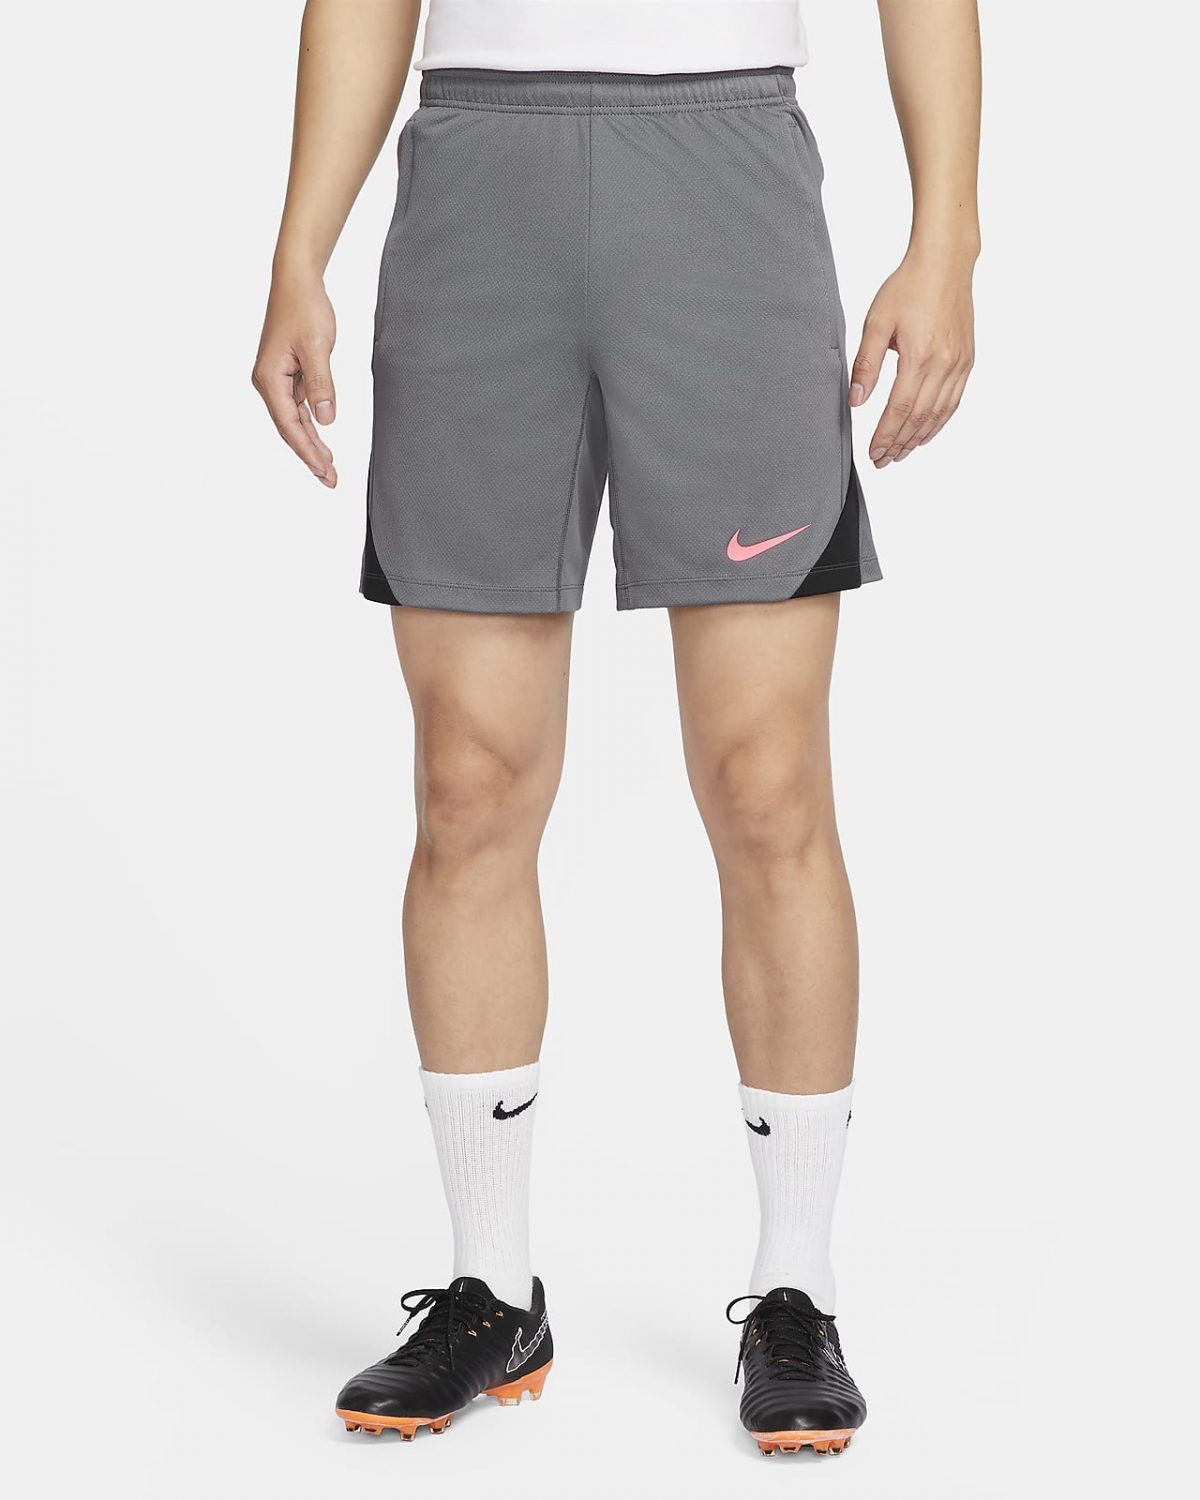 Мужские шорты Nike Strike фото